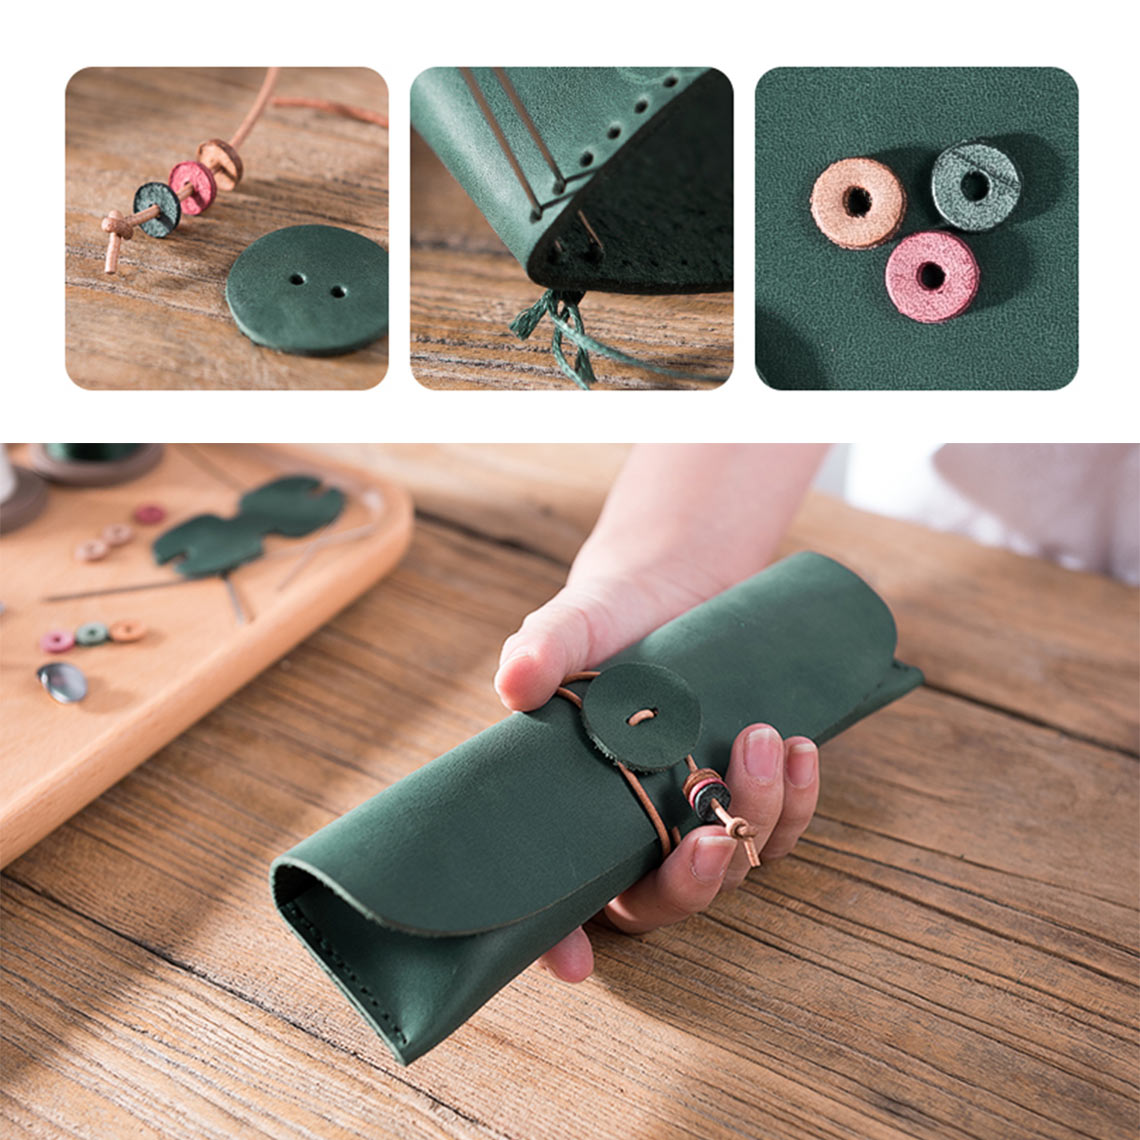 POPSEWING® Full Grain Leather Drawstring Pen Case DIY Kits